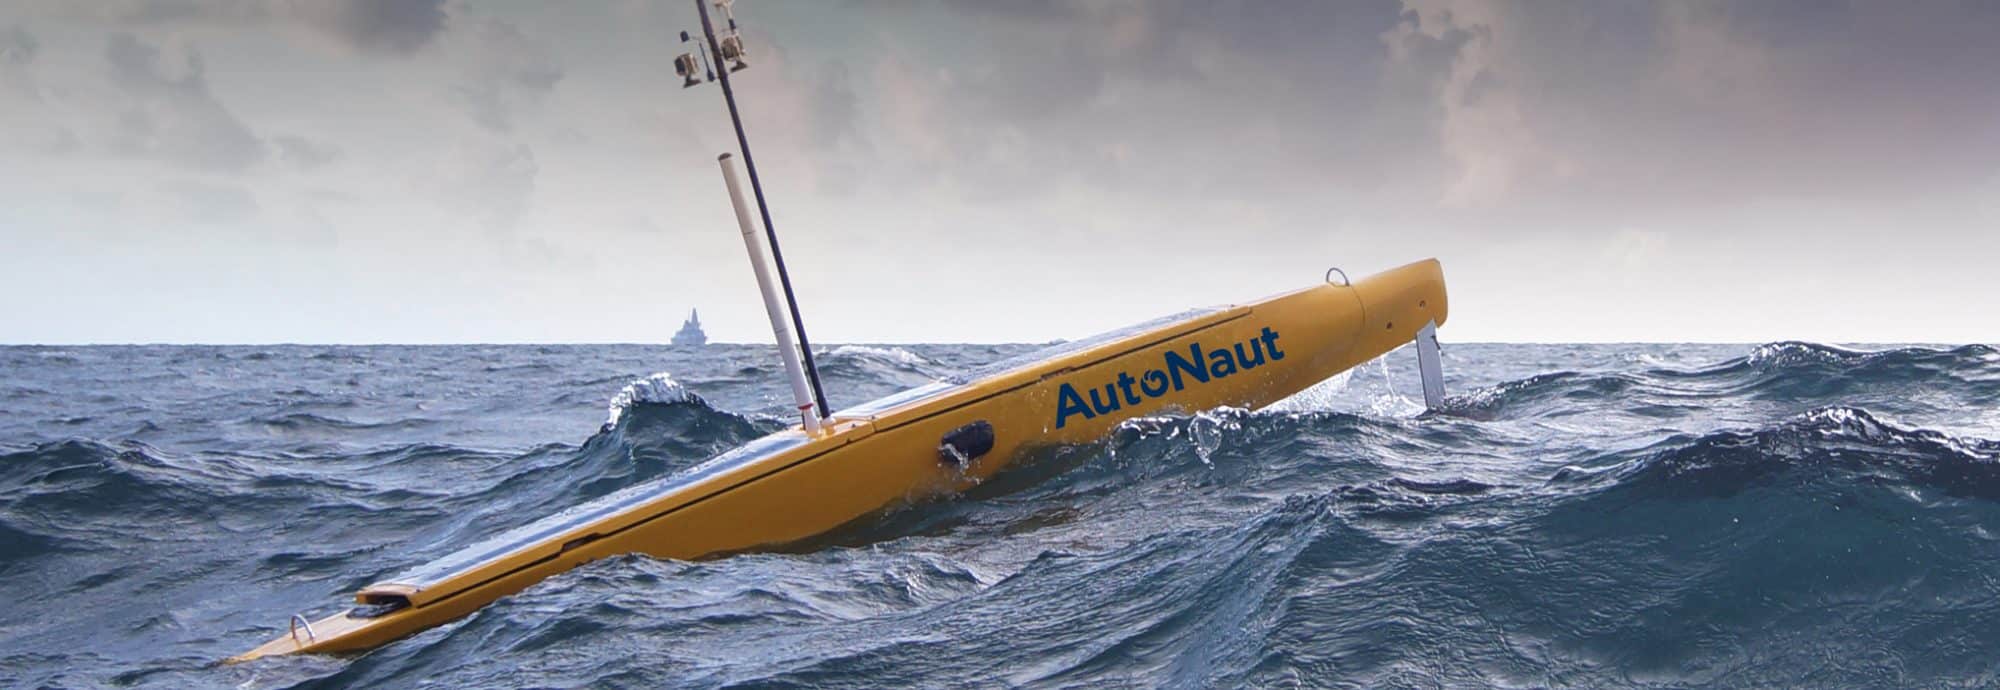 Photo of the 'AutoNaut' out on slightly choppy seas.